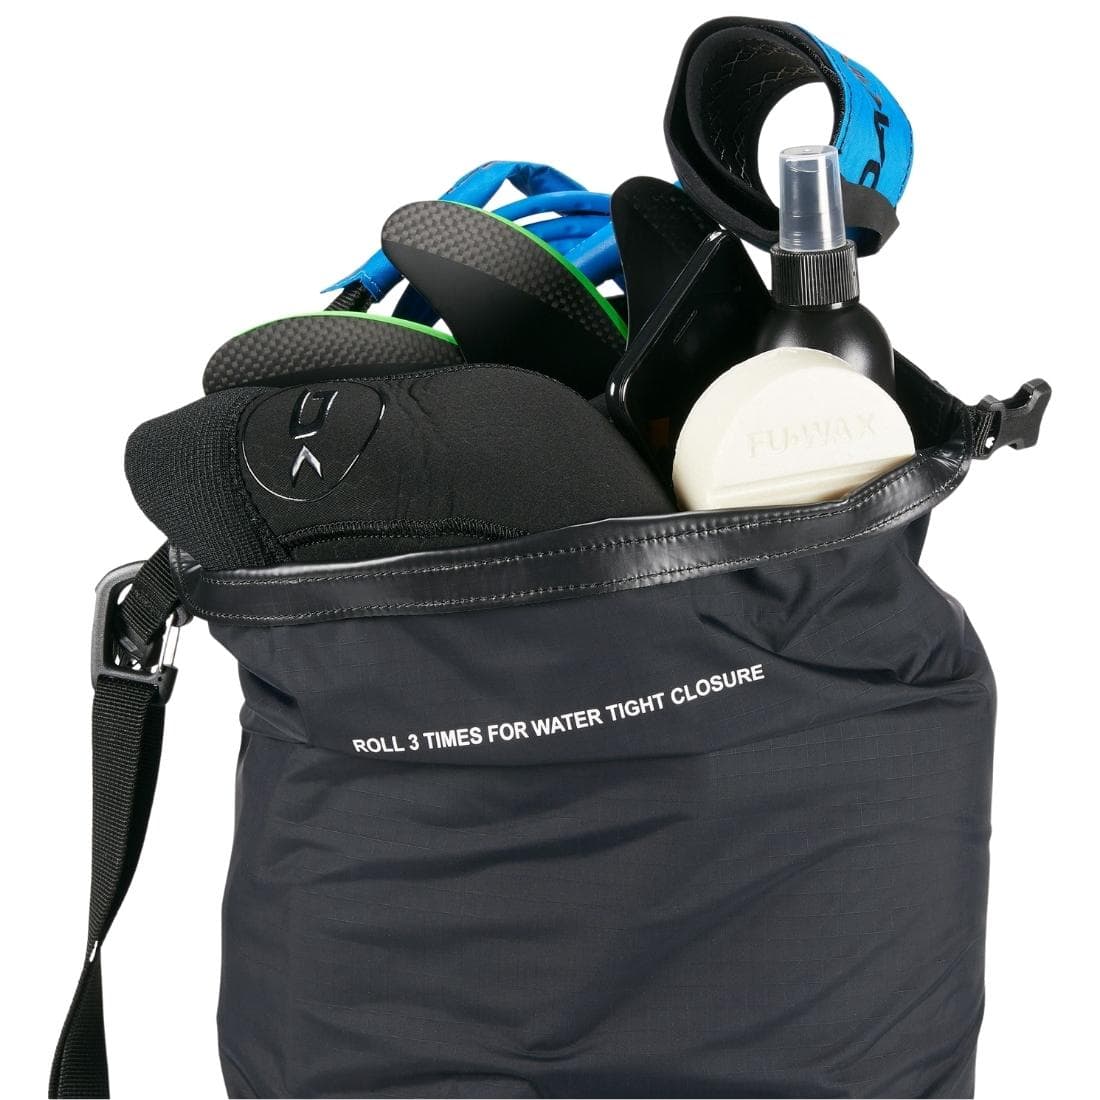 Dakine Packable Rolltop Dry Bag 20L - Black - Wet/Dry Bag by Dakine 20L